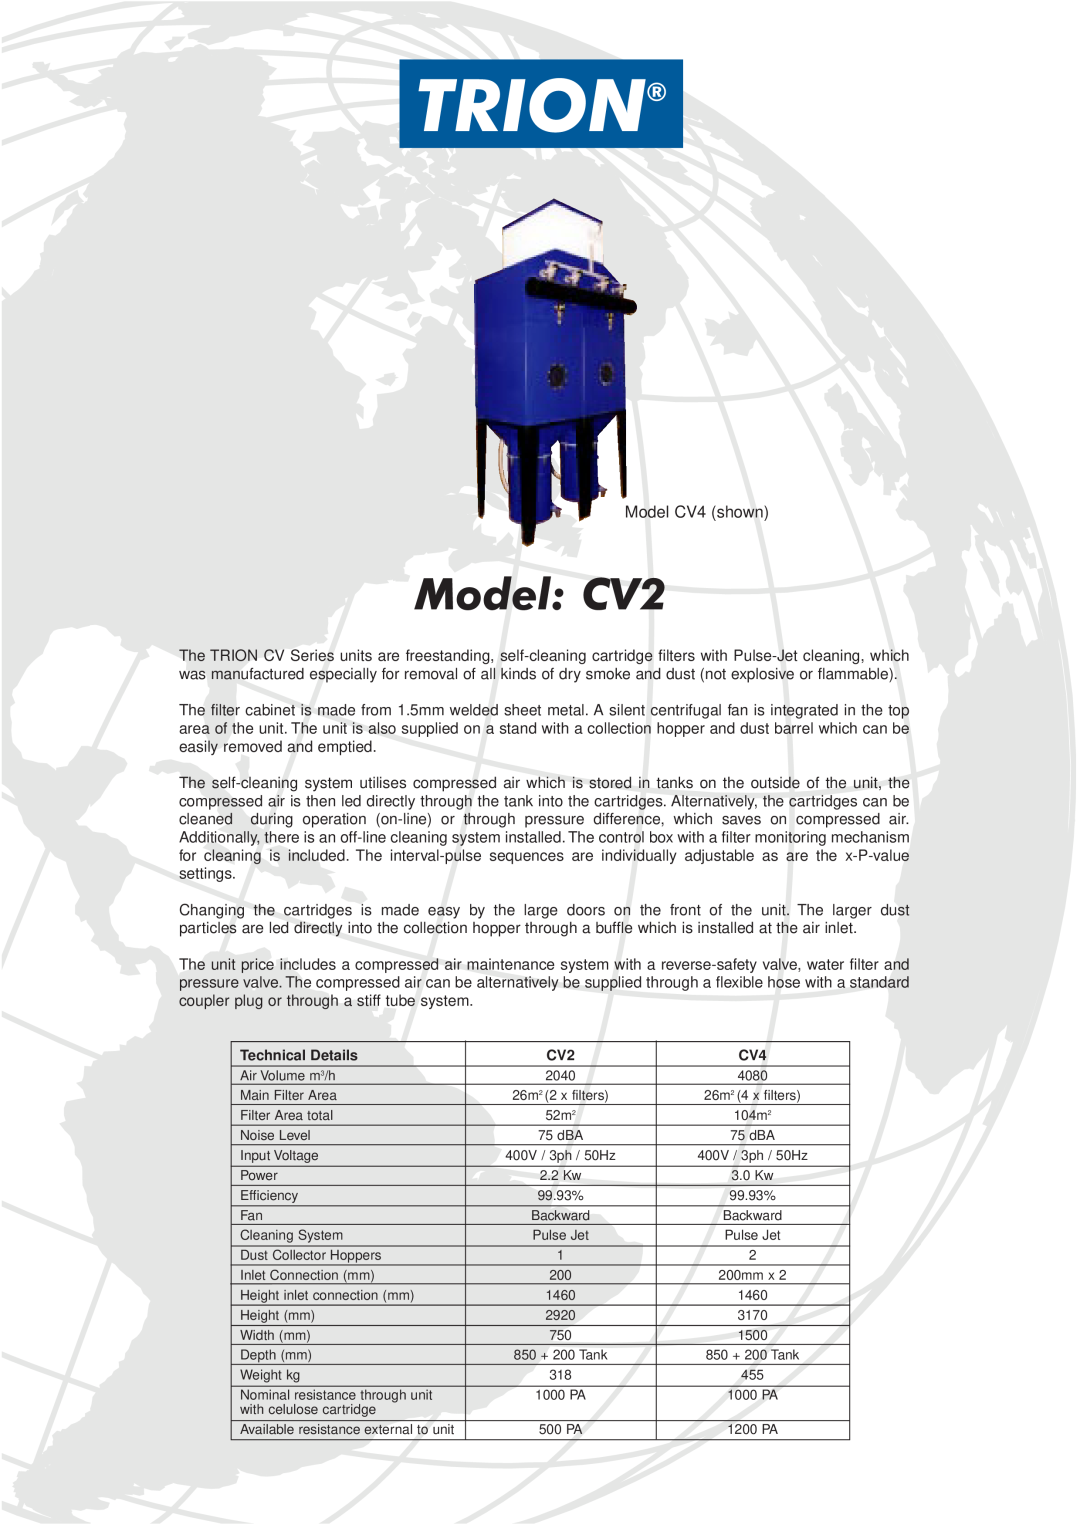 Trion manual Trion, Model CV2, Model CV4 shown, Technical Details 